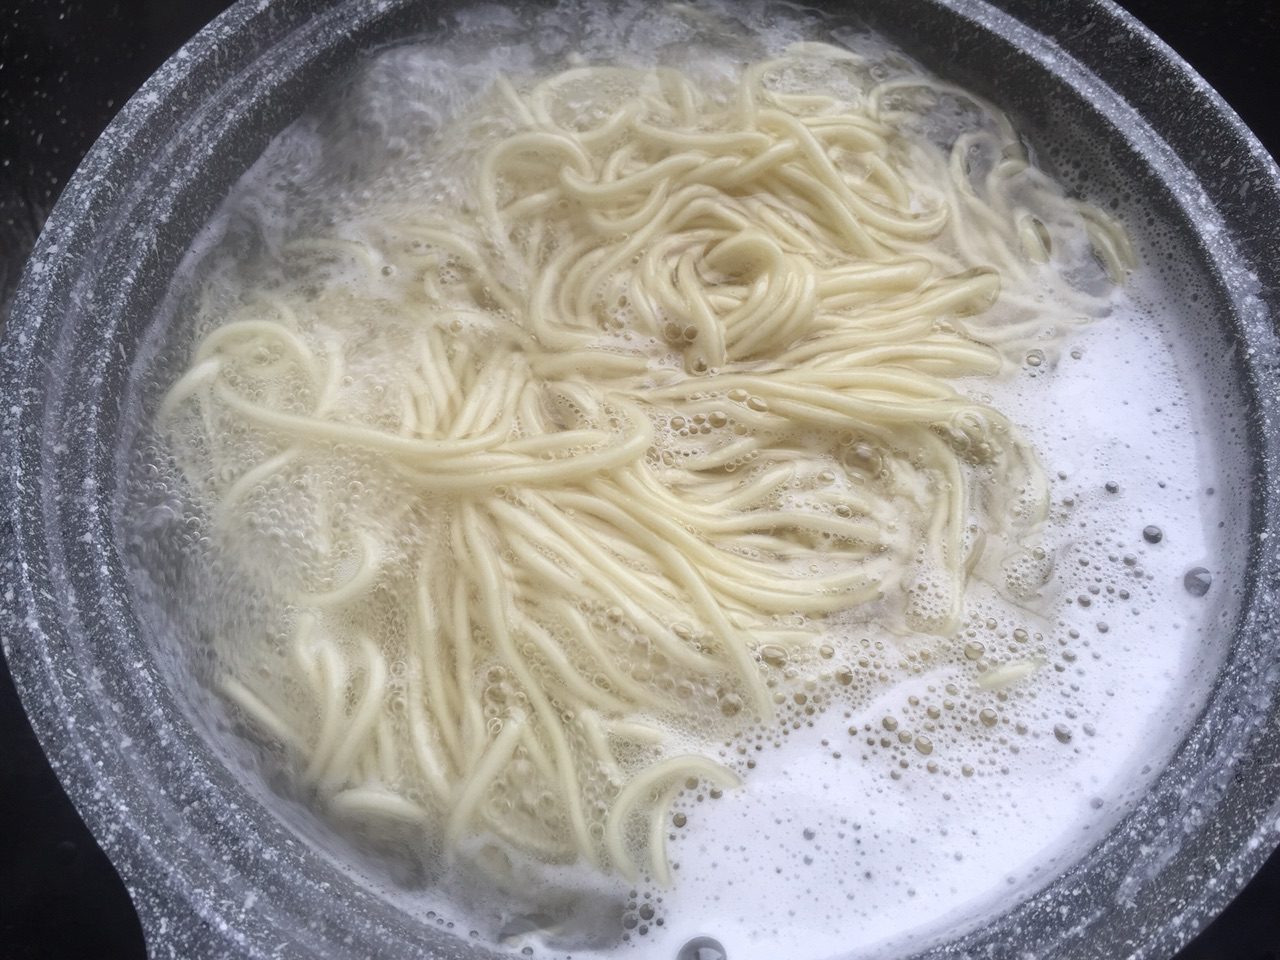 The Method of Making Yangchun Noodles